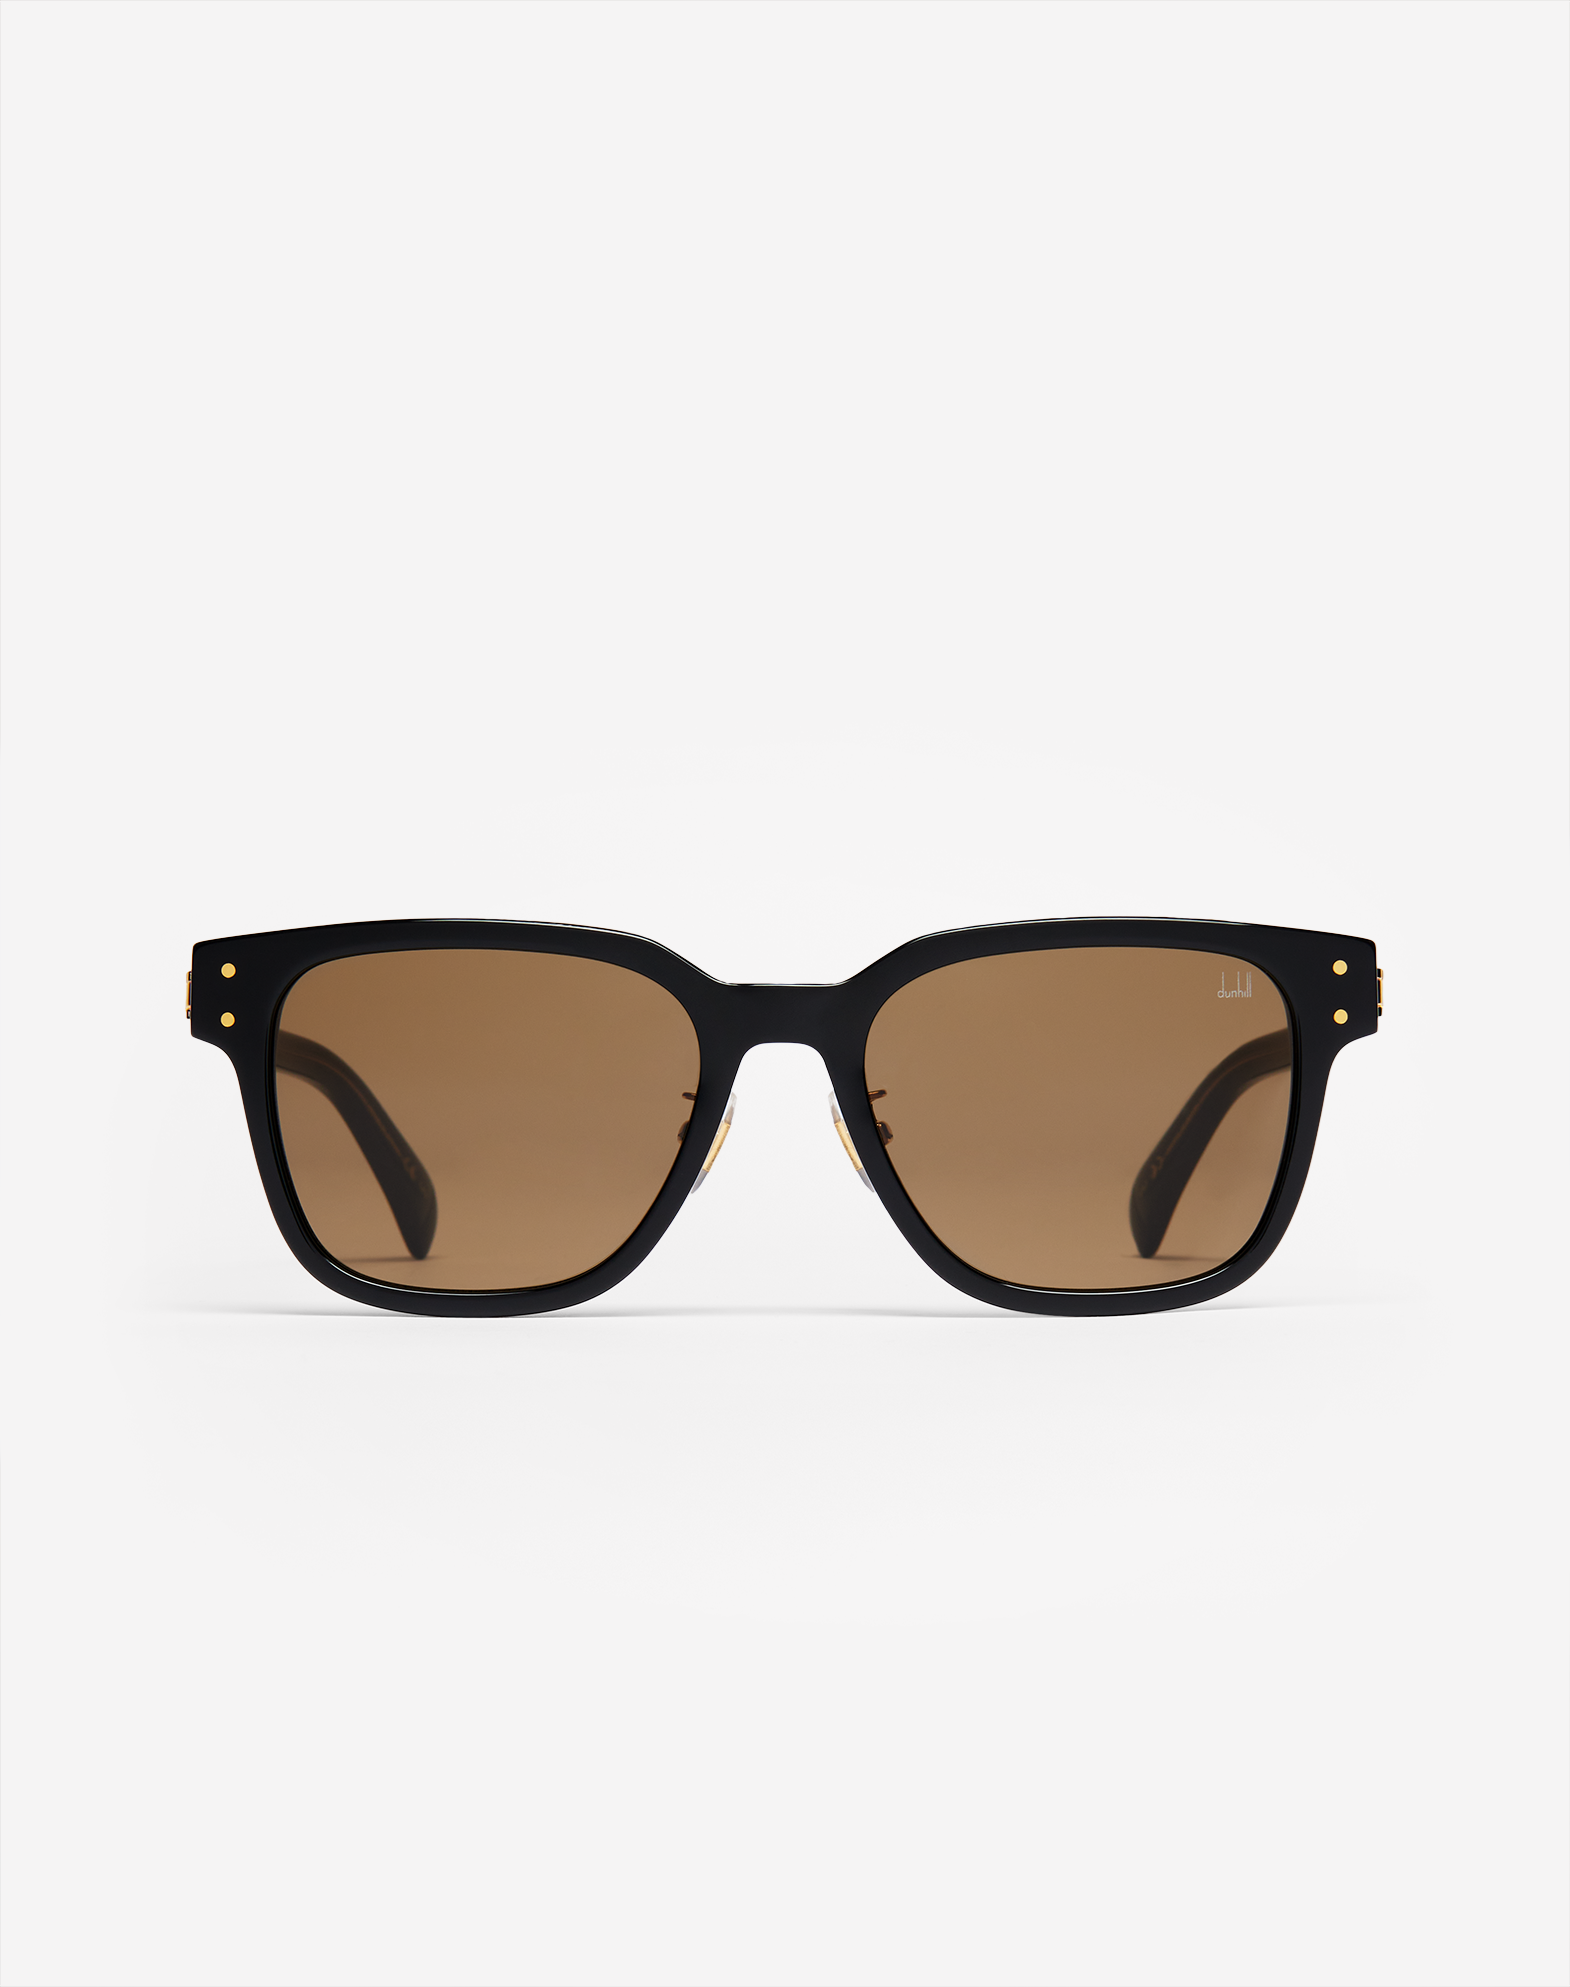 Dunhill Luxury Men's Sunglasses